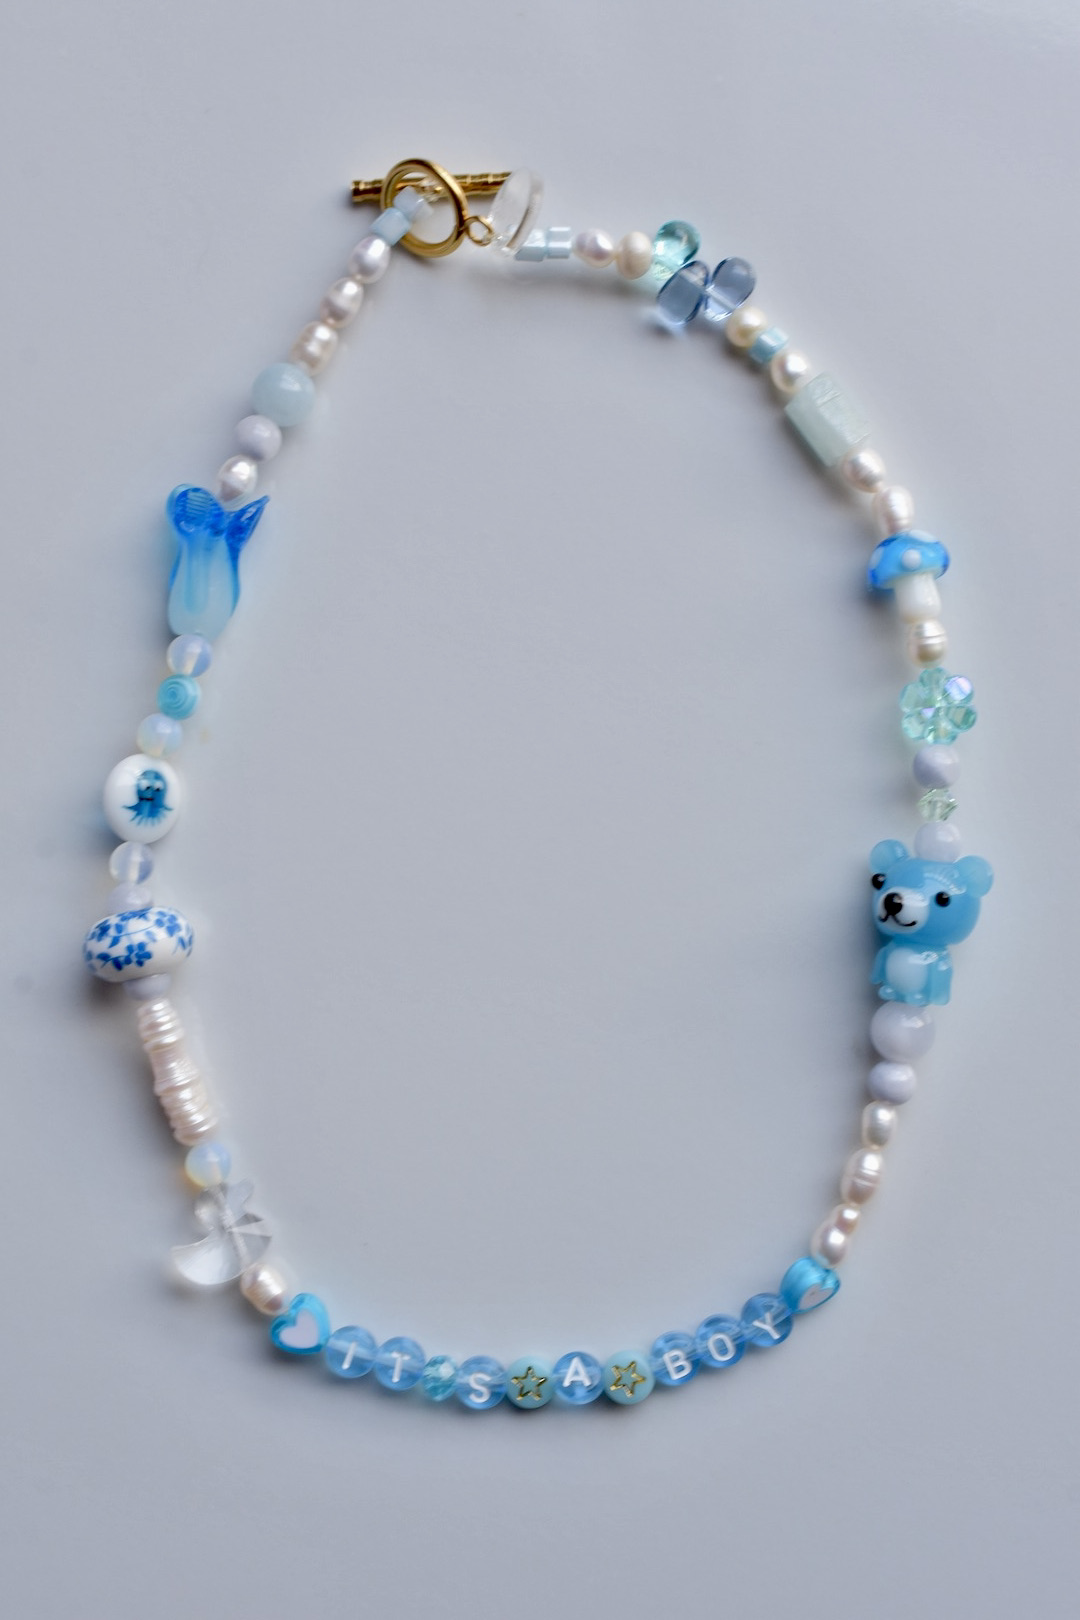 It's a boy blue choker necklace handmade with precious beads